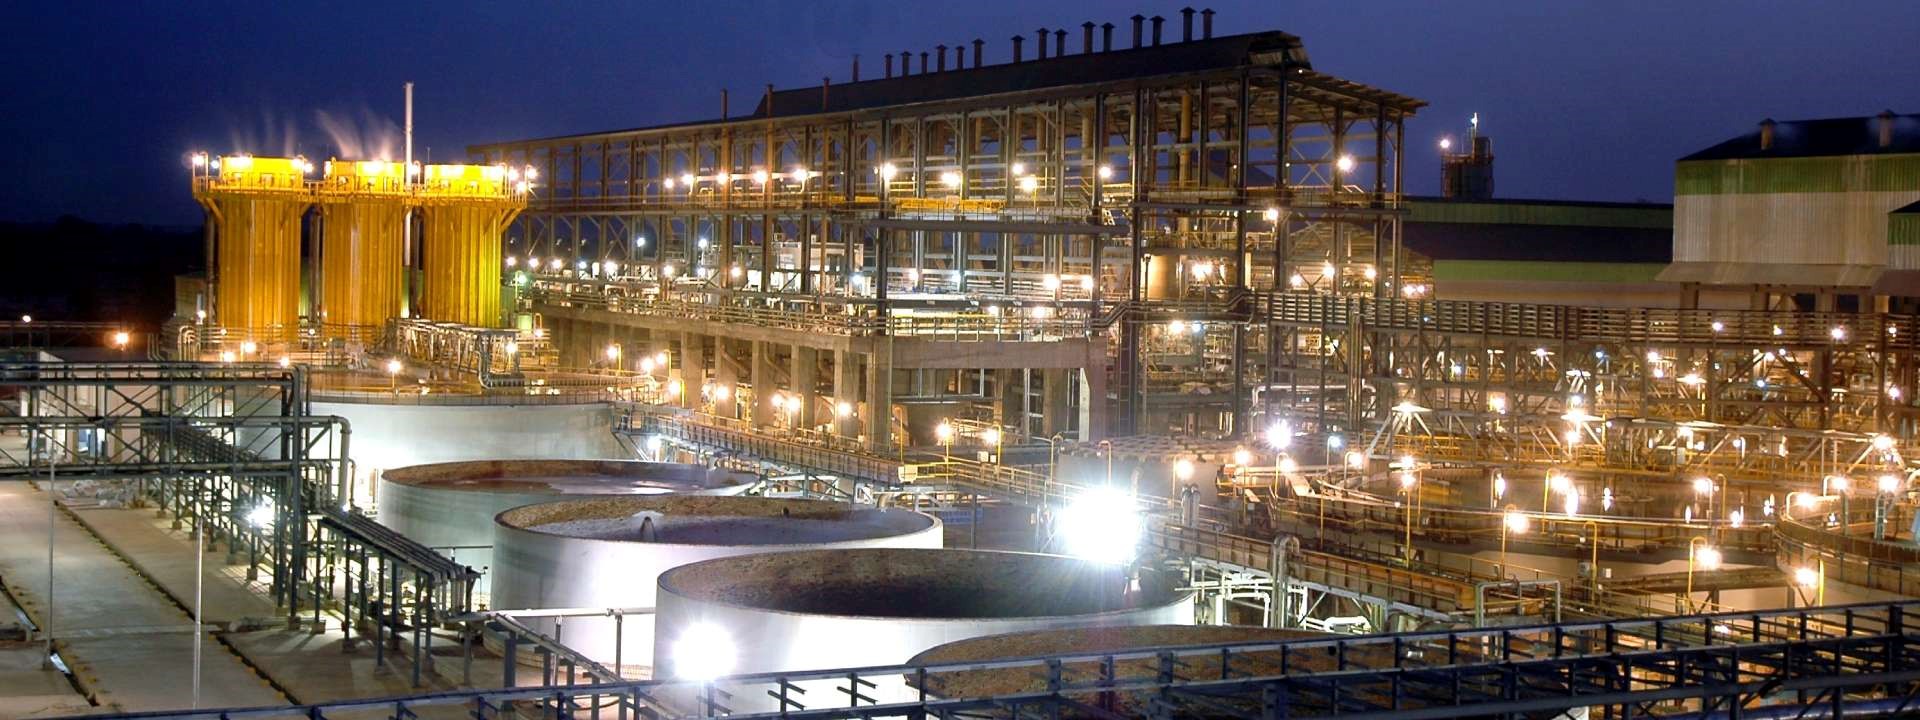 Lead Zinc Beneficiation plant in Udaipur- L&T Construction